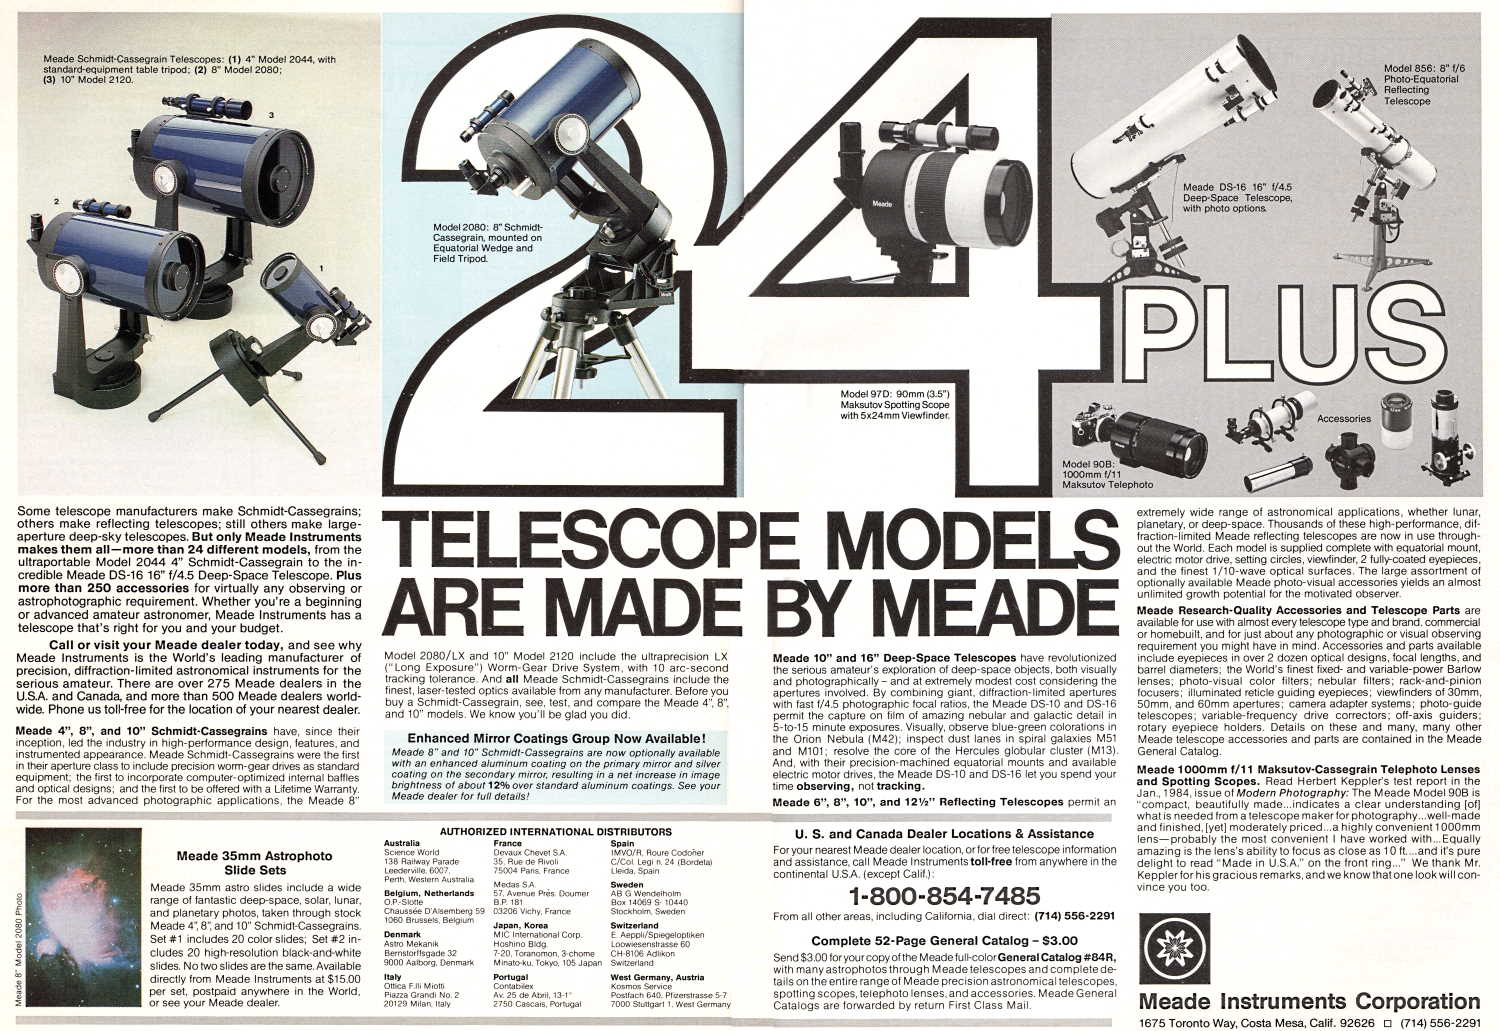 Meade Instrument Corporation advertisement, <em>Sky and Telescope</em>, March 1984